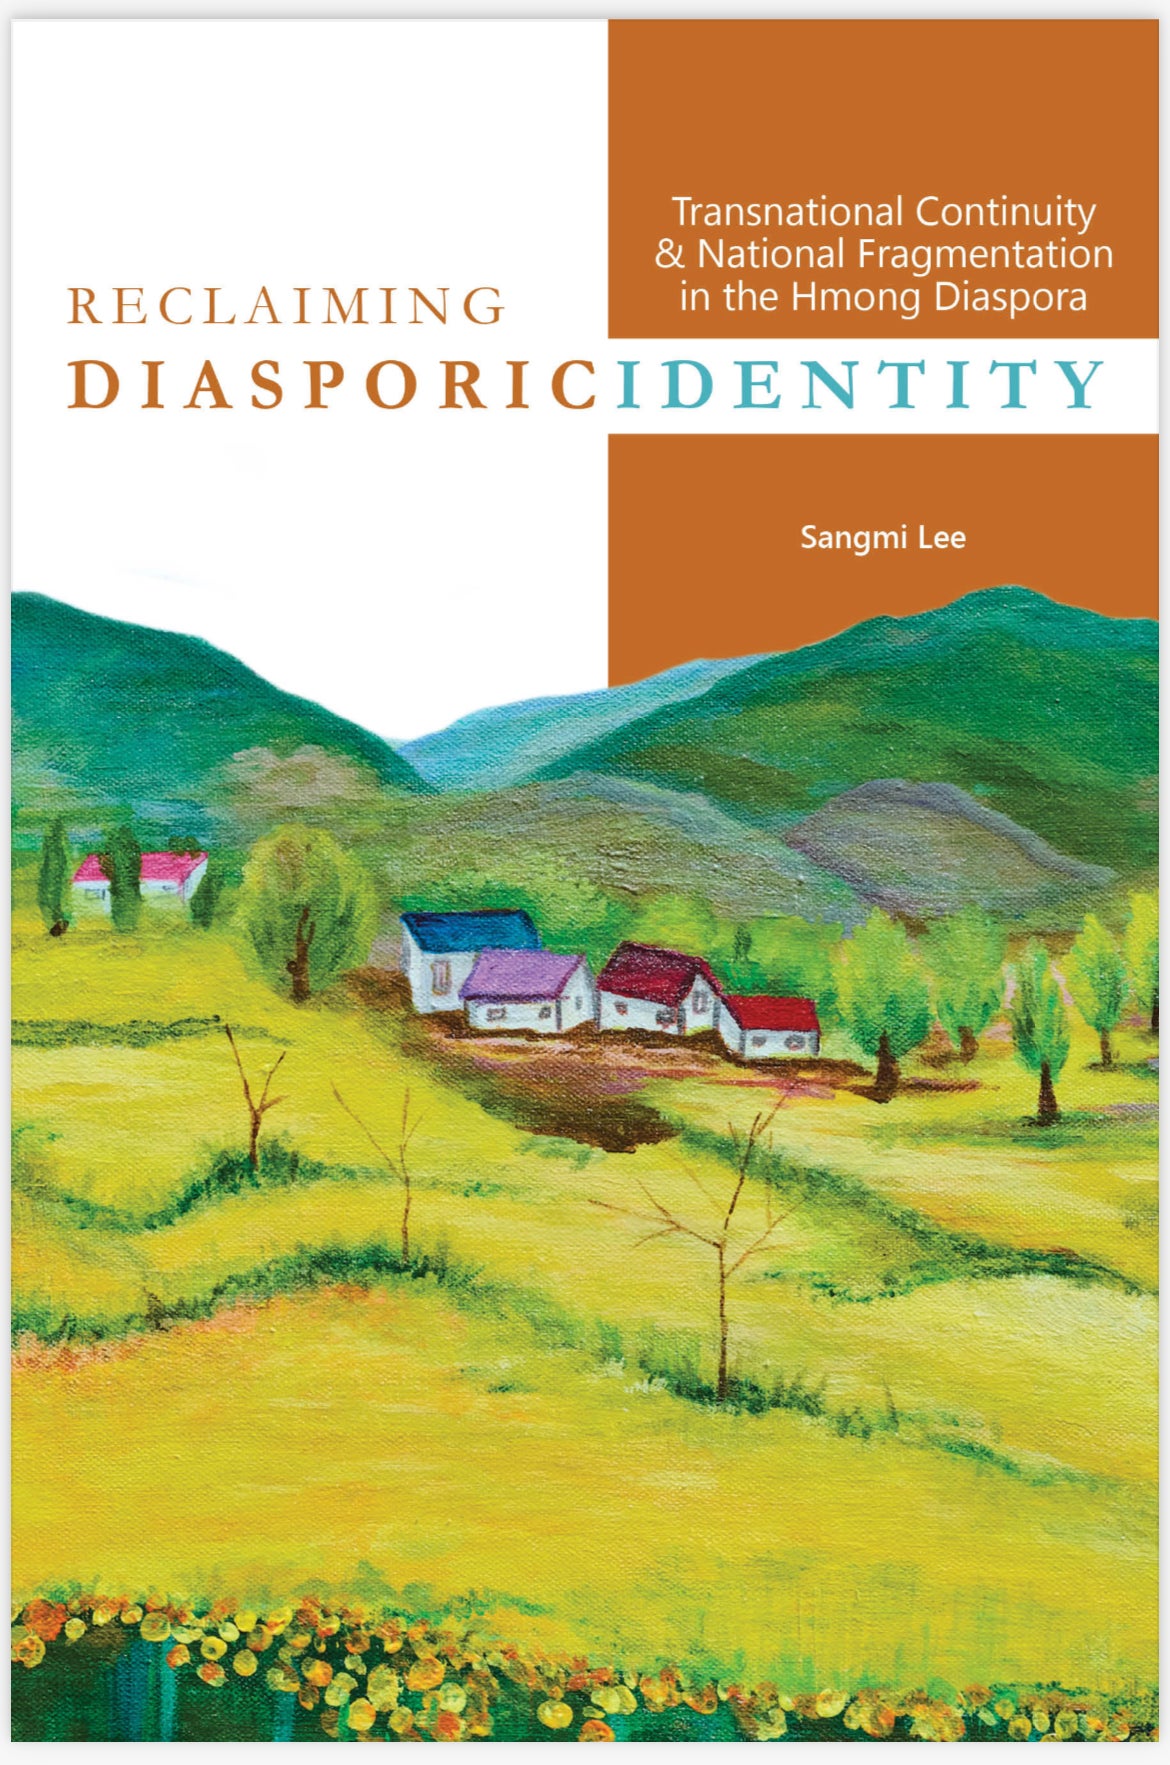 Lee, Sangmi. 2024. Reclaiming Diasporic Identity. Transnational Continuity and National Fragmentation in the Hmong Diaspora. University of Illinois Press.